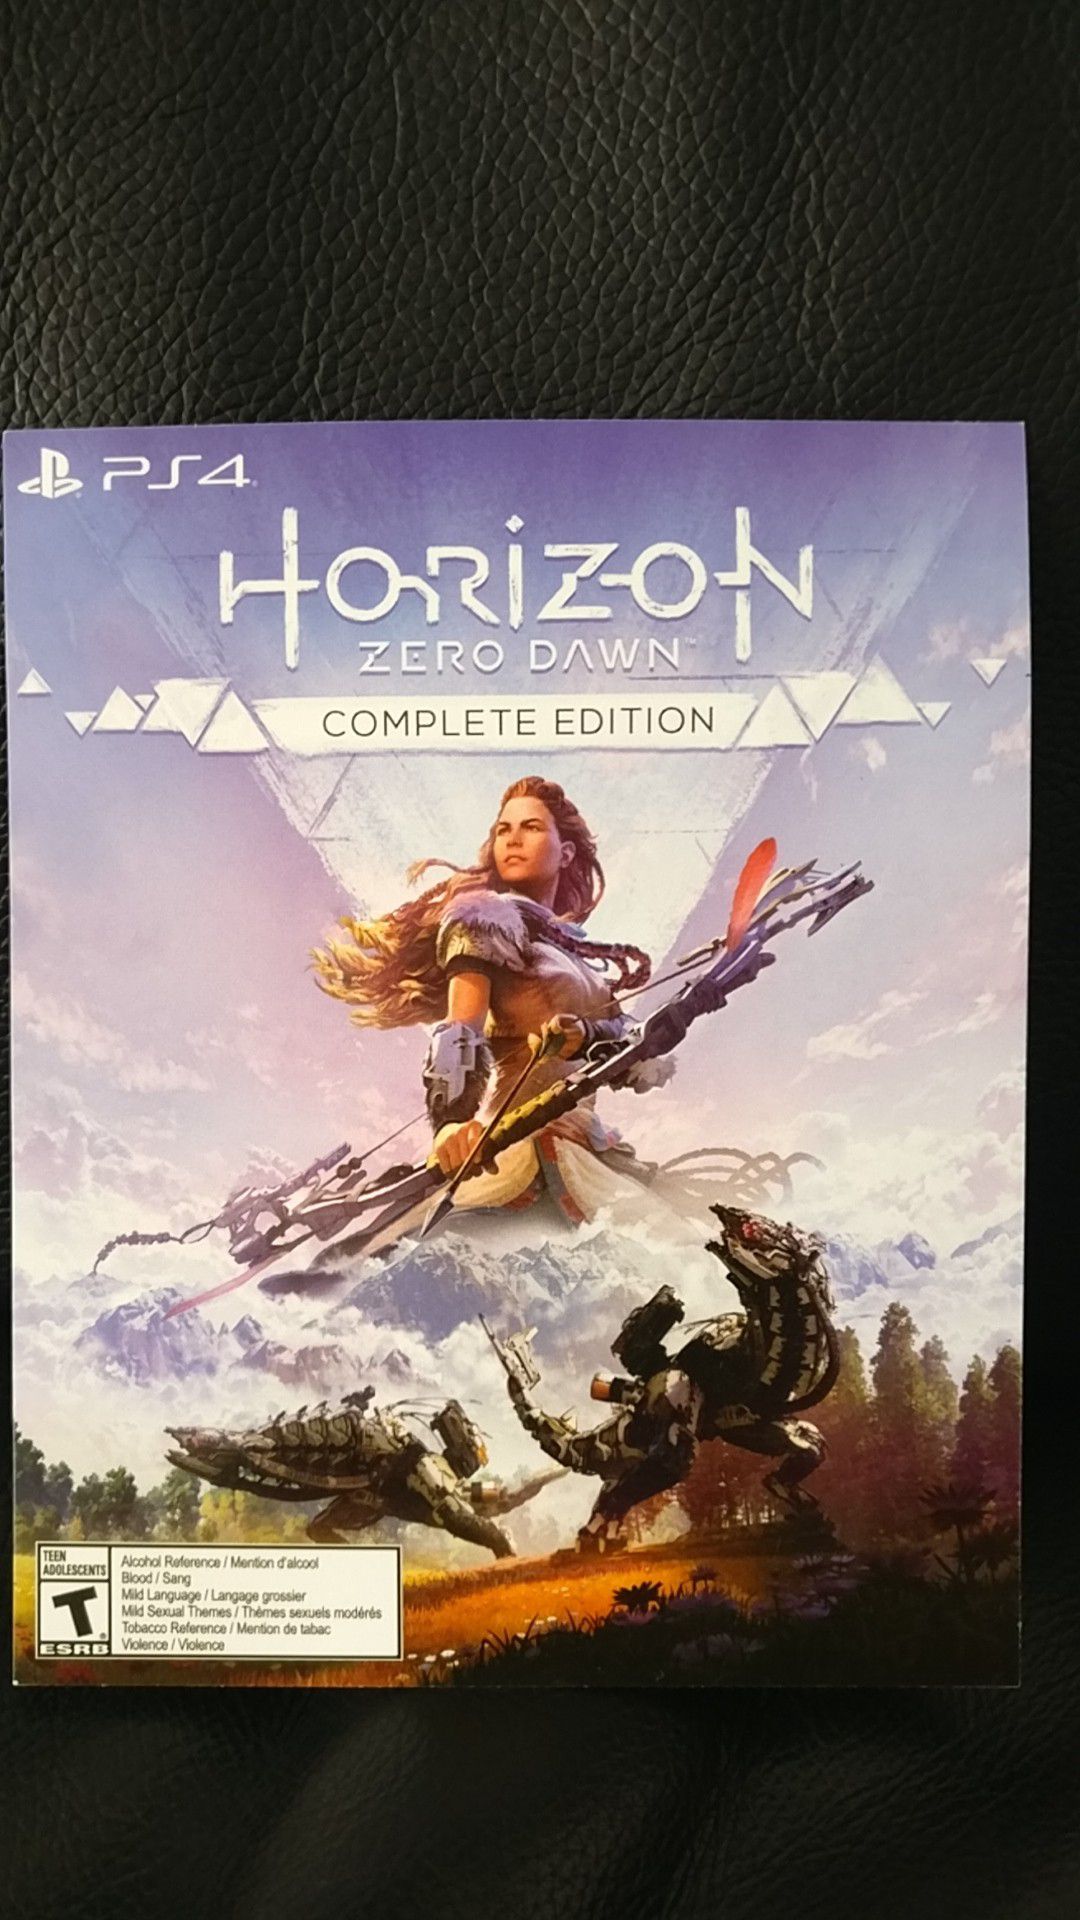 PS4 Horizon Zero Dawn complete edition digital code